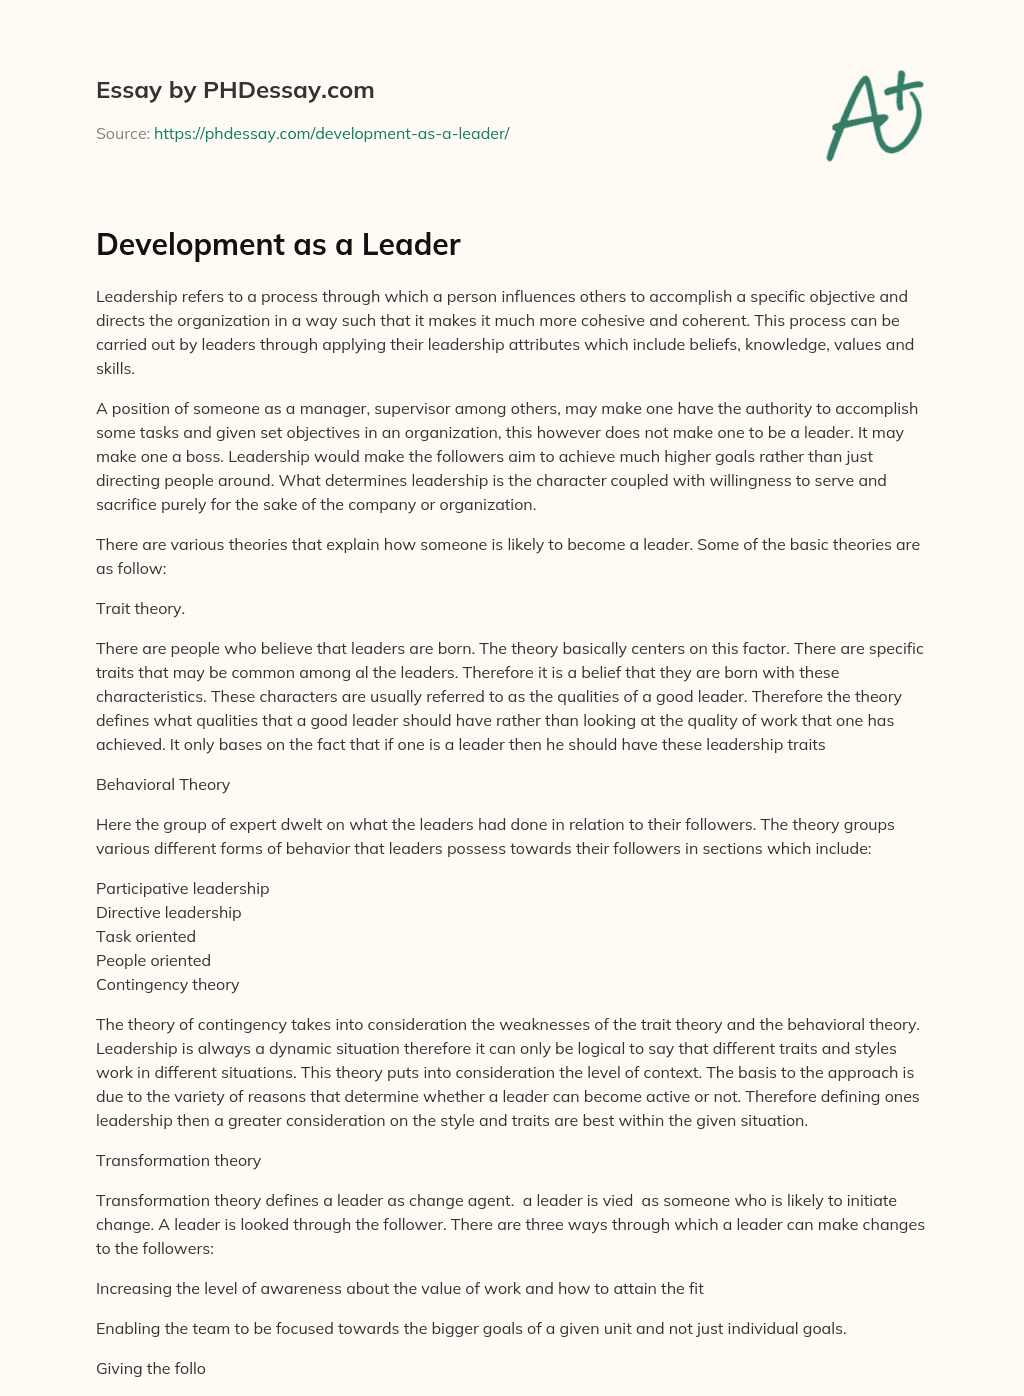 Development as a Leader essay